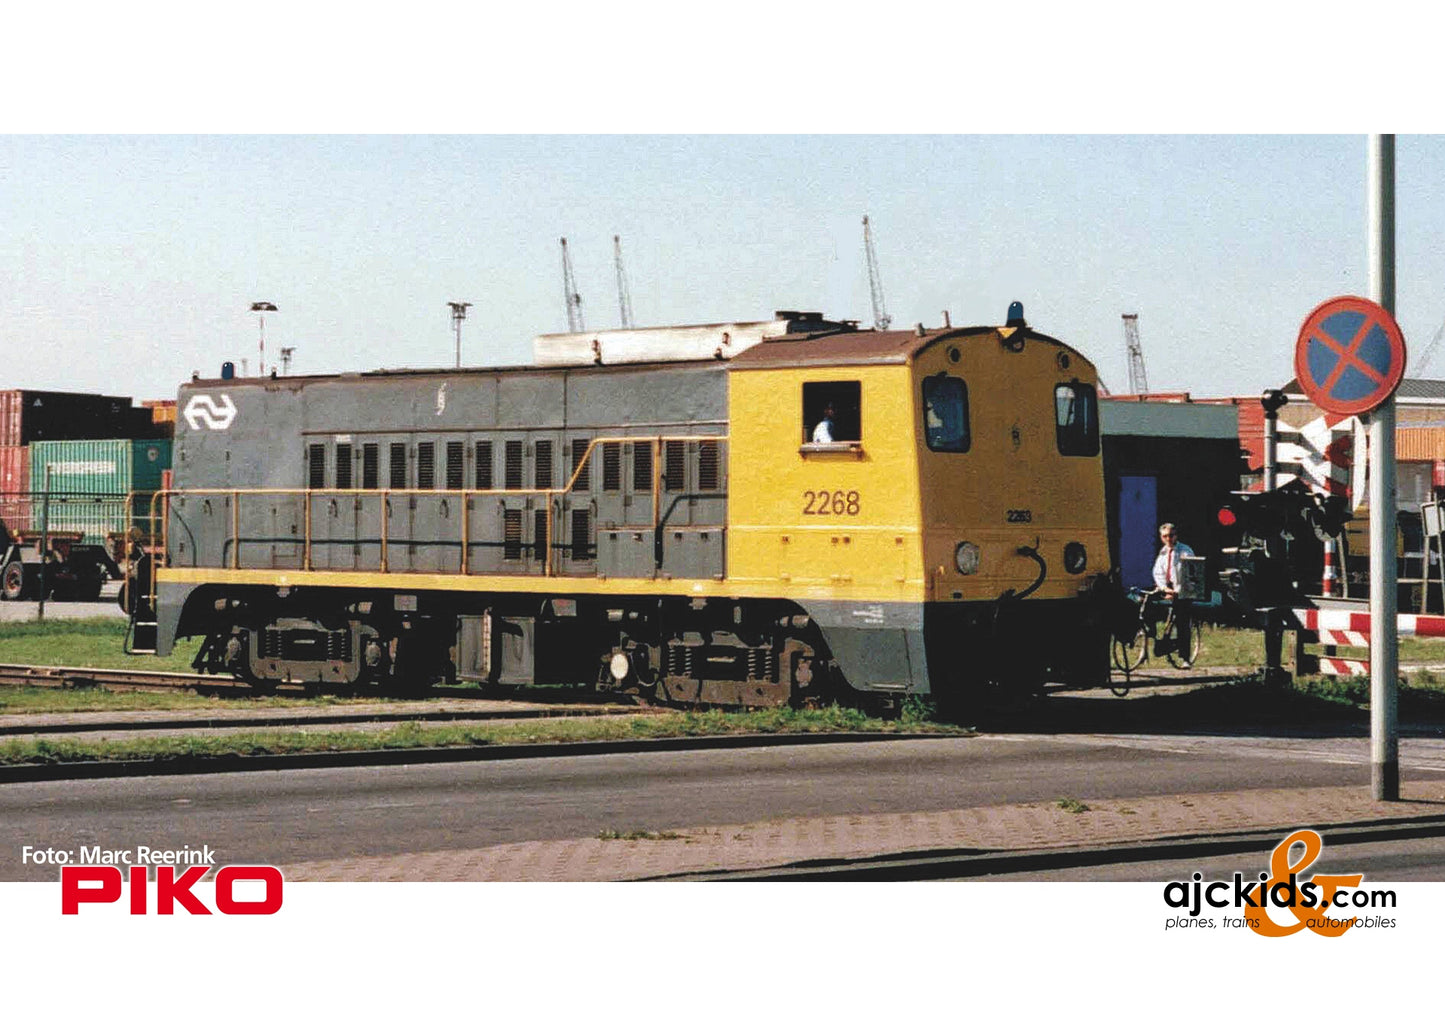 Piko 52934 - Rh 2200 Diesel Locomotive, Sound Radiolok NS IV